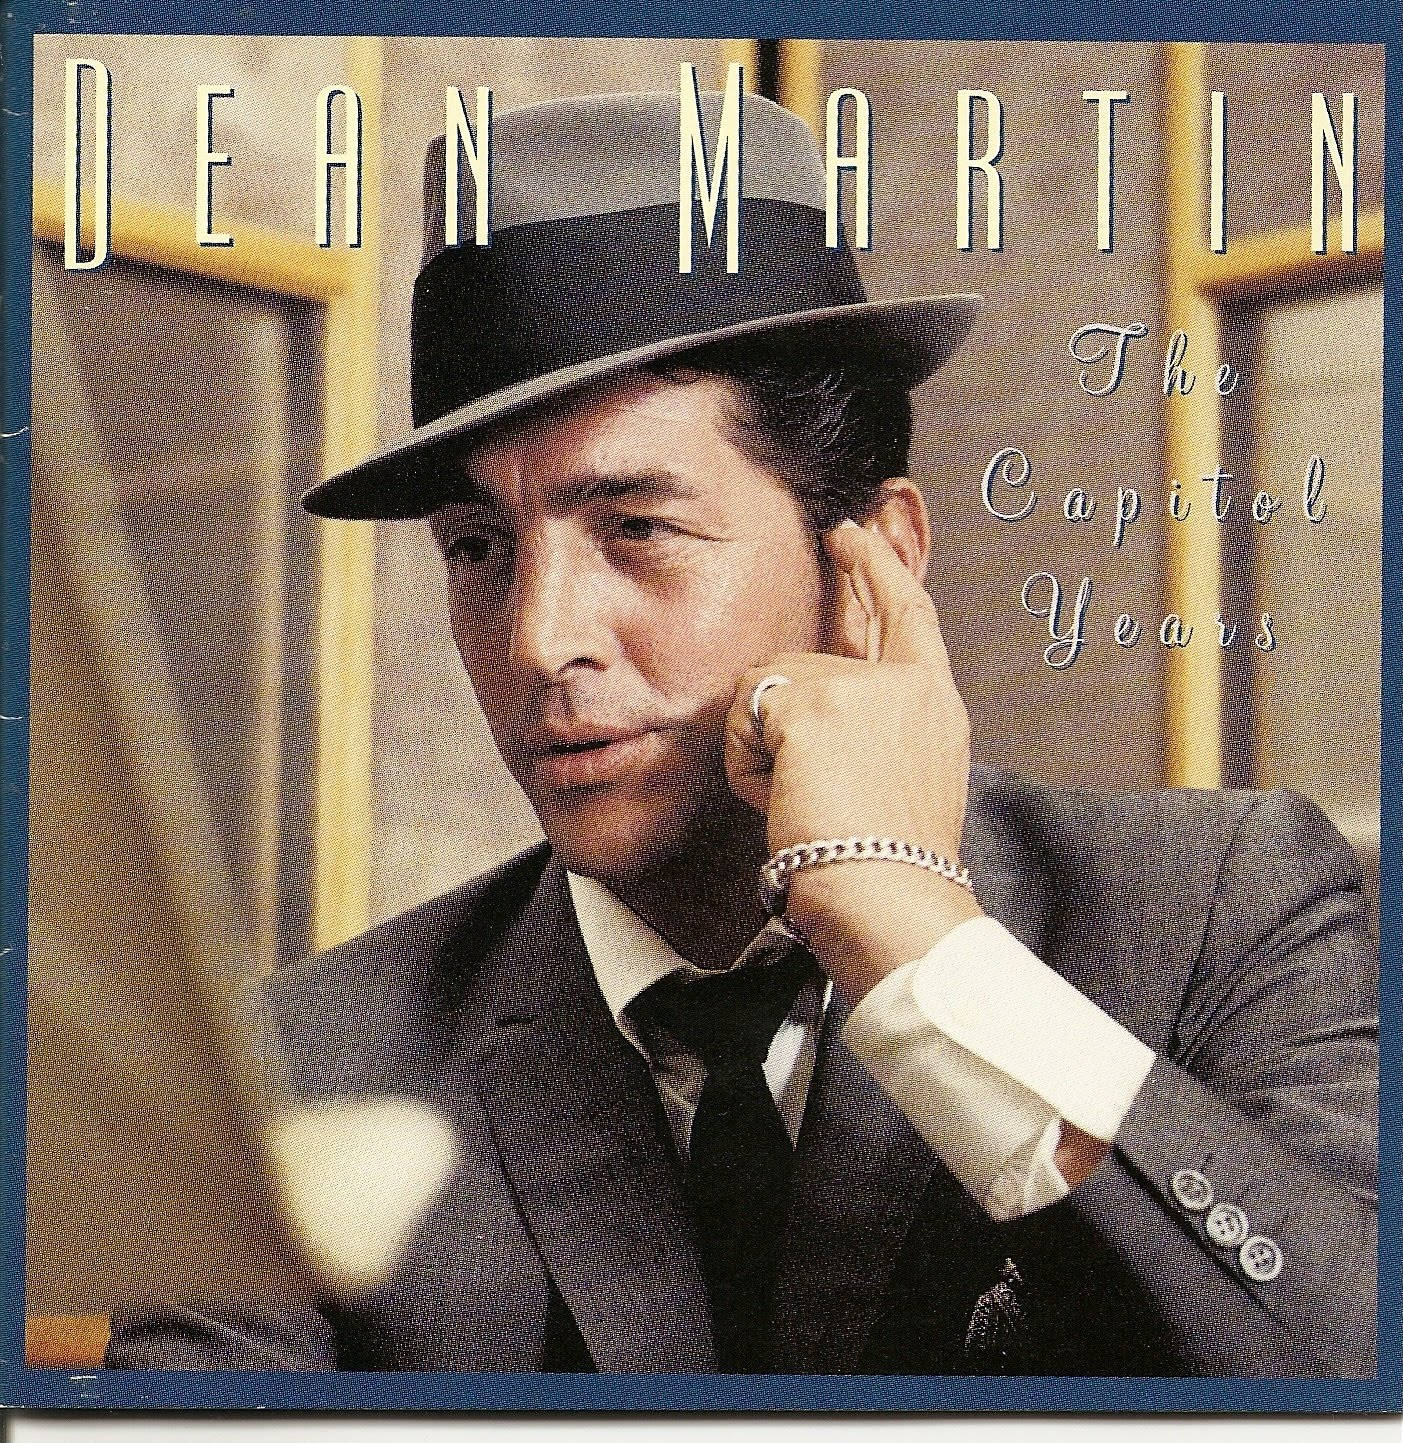 American Singer Dean Martin The Capitol Years Album Cover Wallpaper